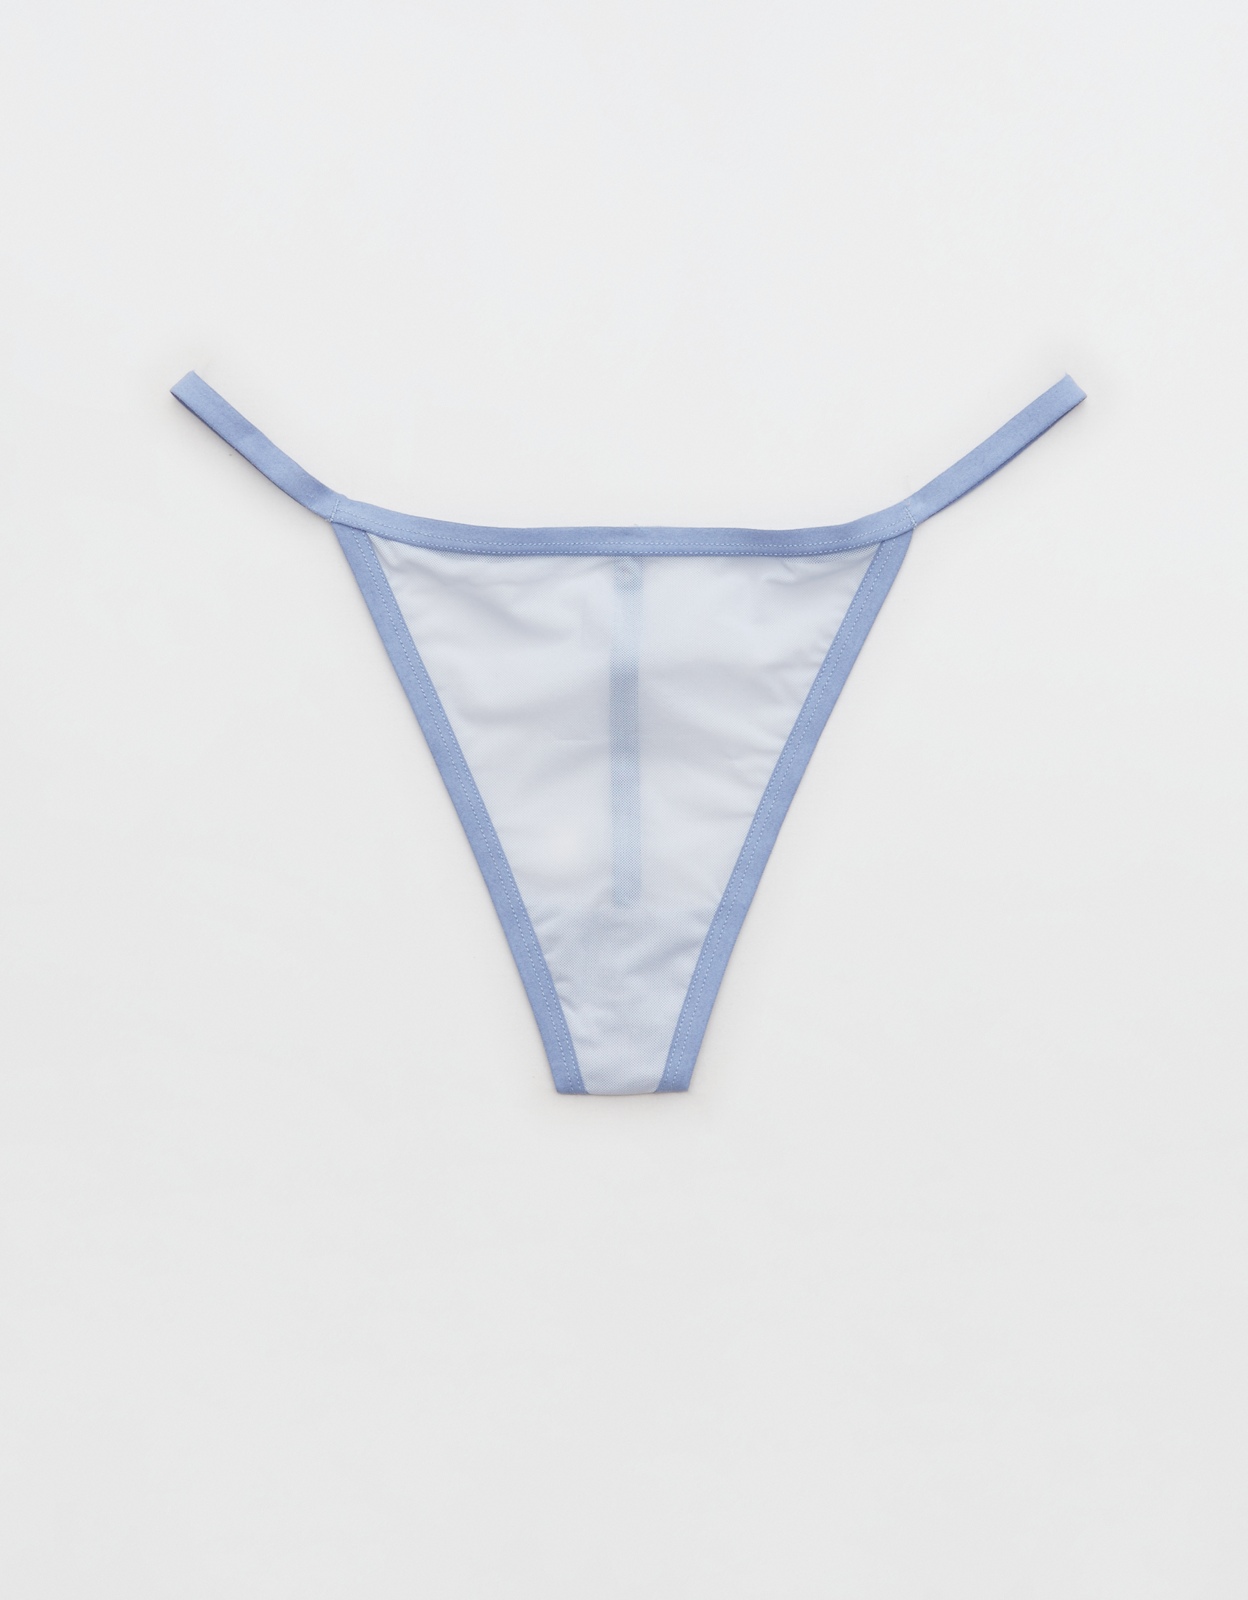 Buy SMOOTHEZ Mesh String Thong Underwear online